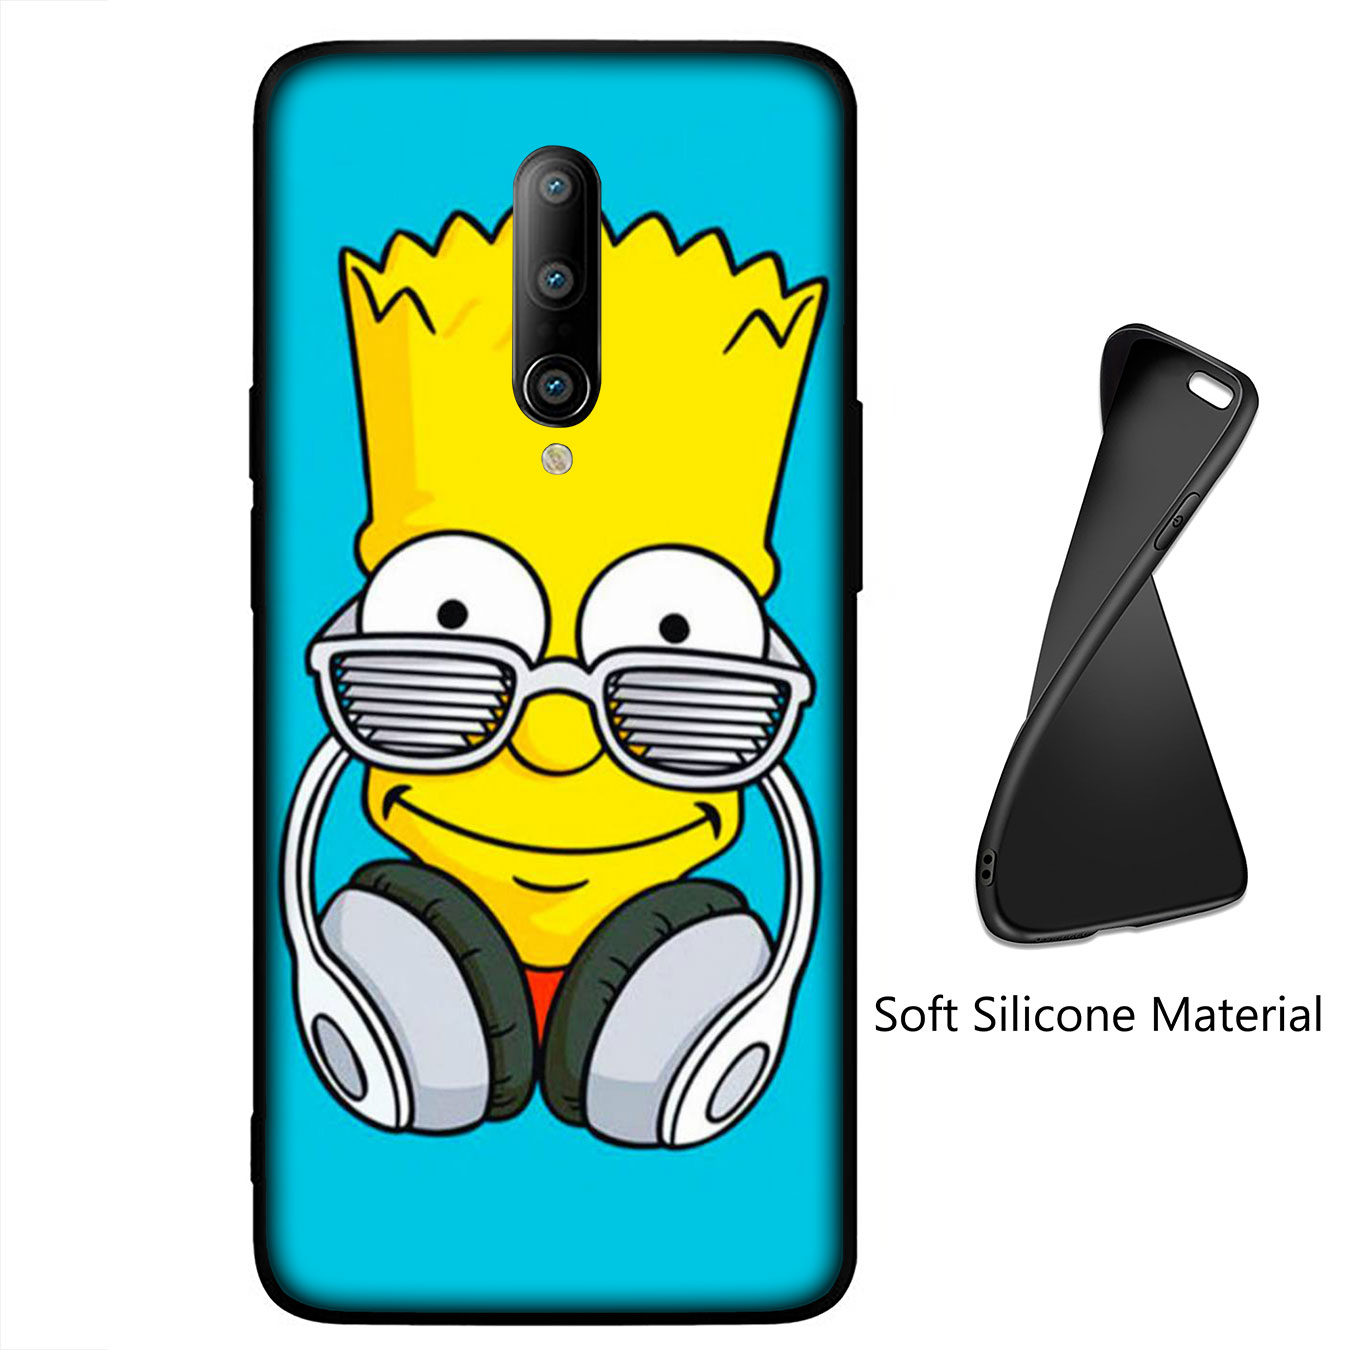 Ốp Điện Thoại Silicon Mềm Hình Simpsons Supreme A170 Cho Samsung Galaxy S21 Ultra S8 Plus M62 F62 A32 A52 A72 A12 S21 + S8 + S21Plus